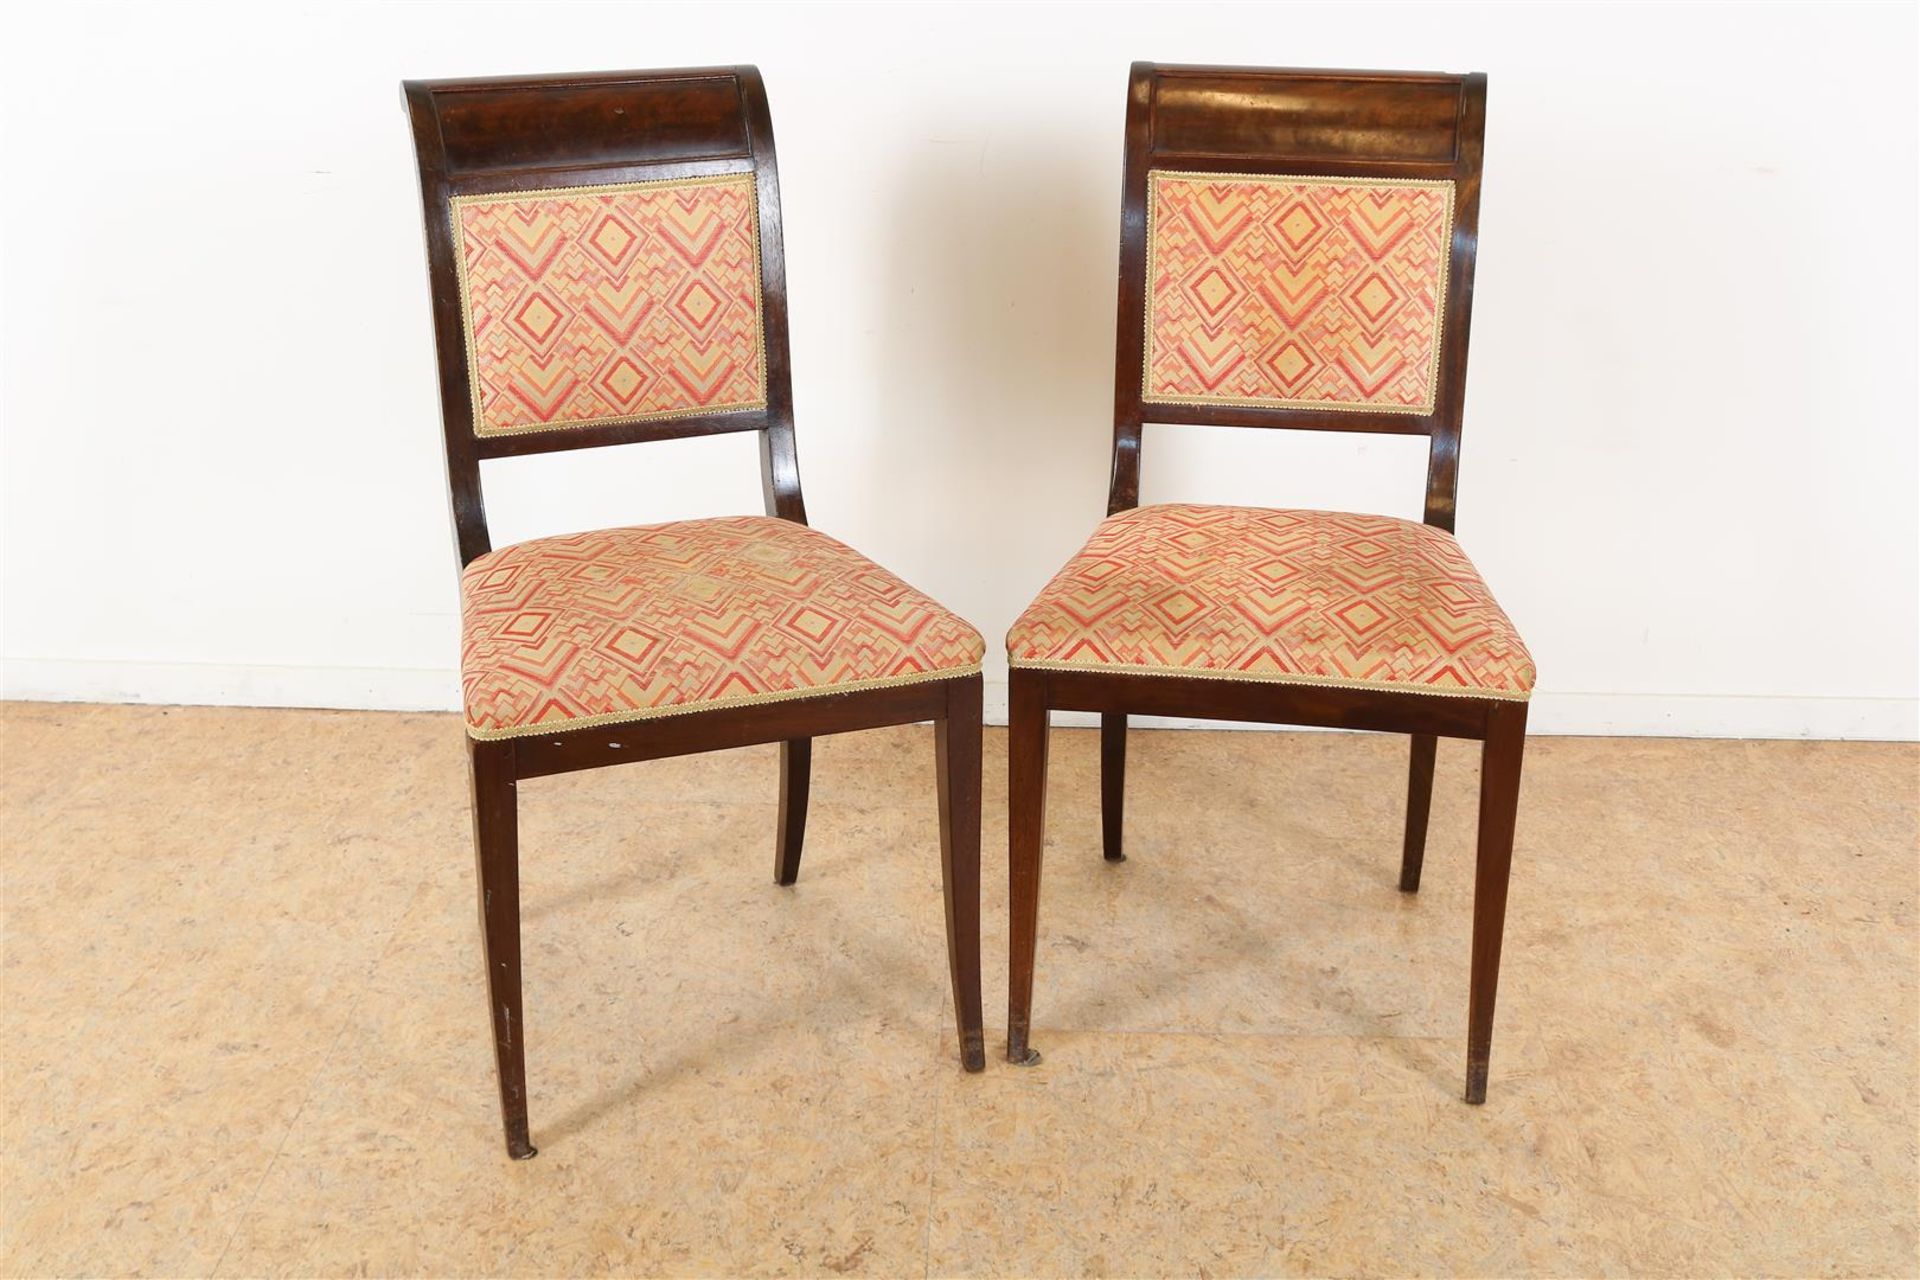 Series of 2 mahogany chairs